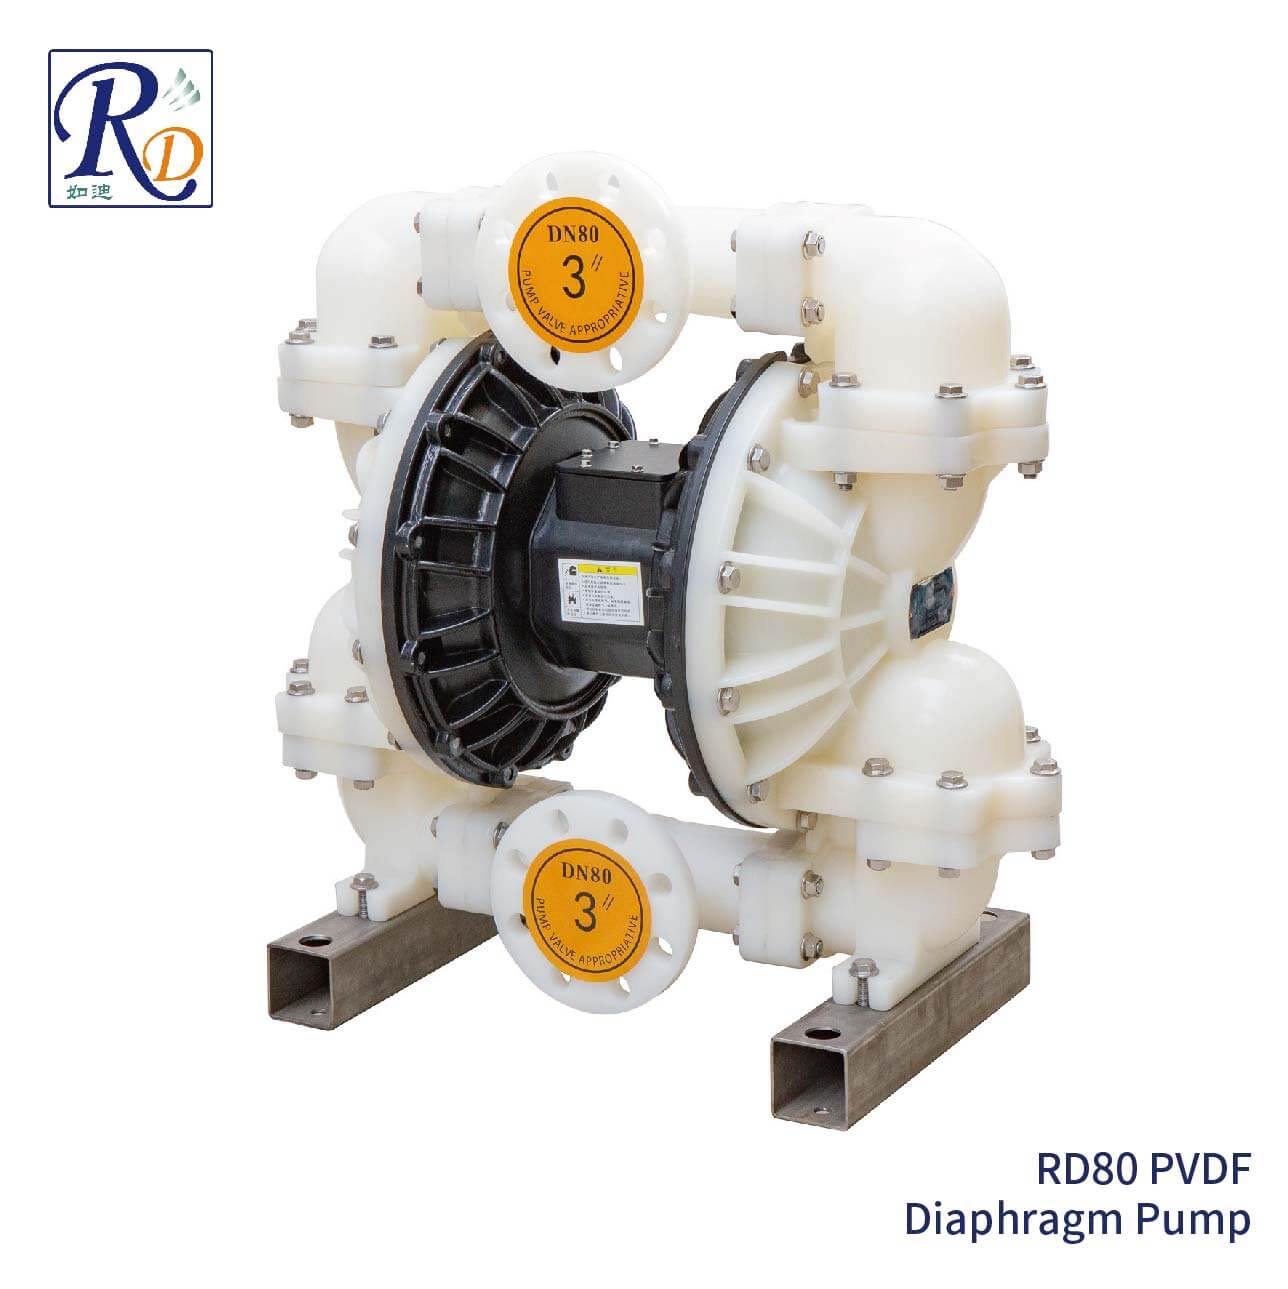 RD80 PVDF Diaphragm Pump